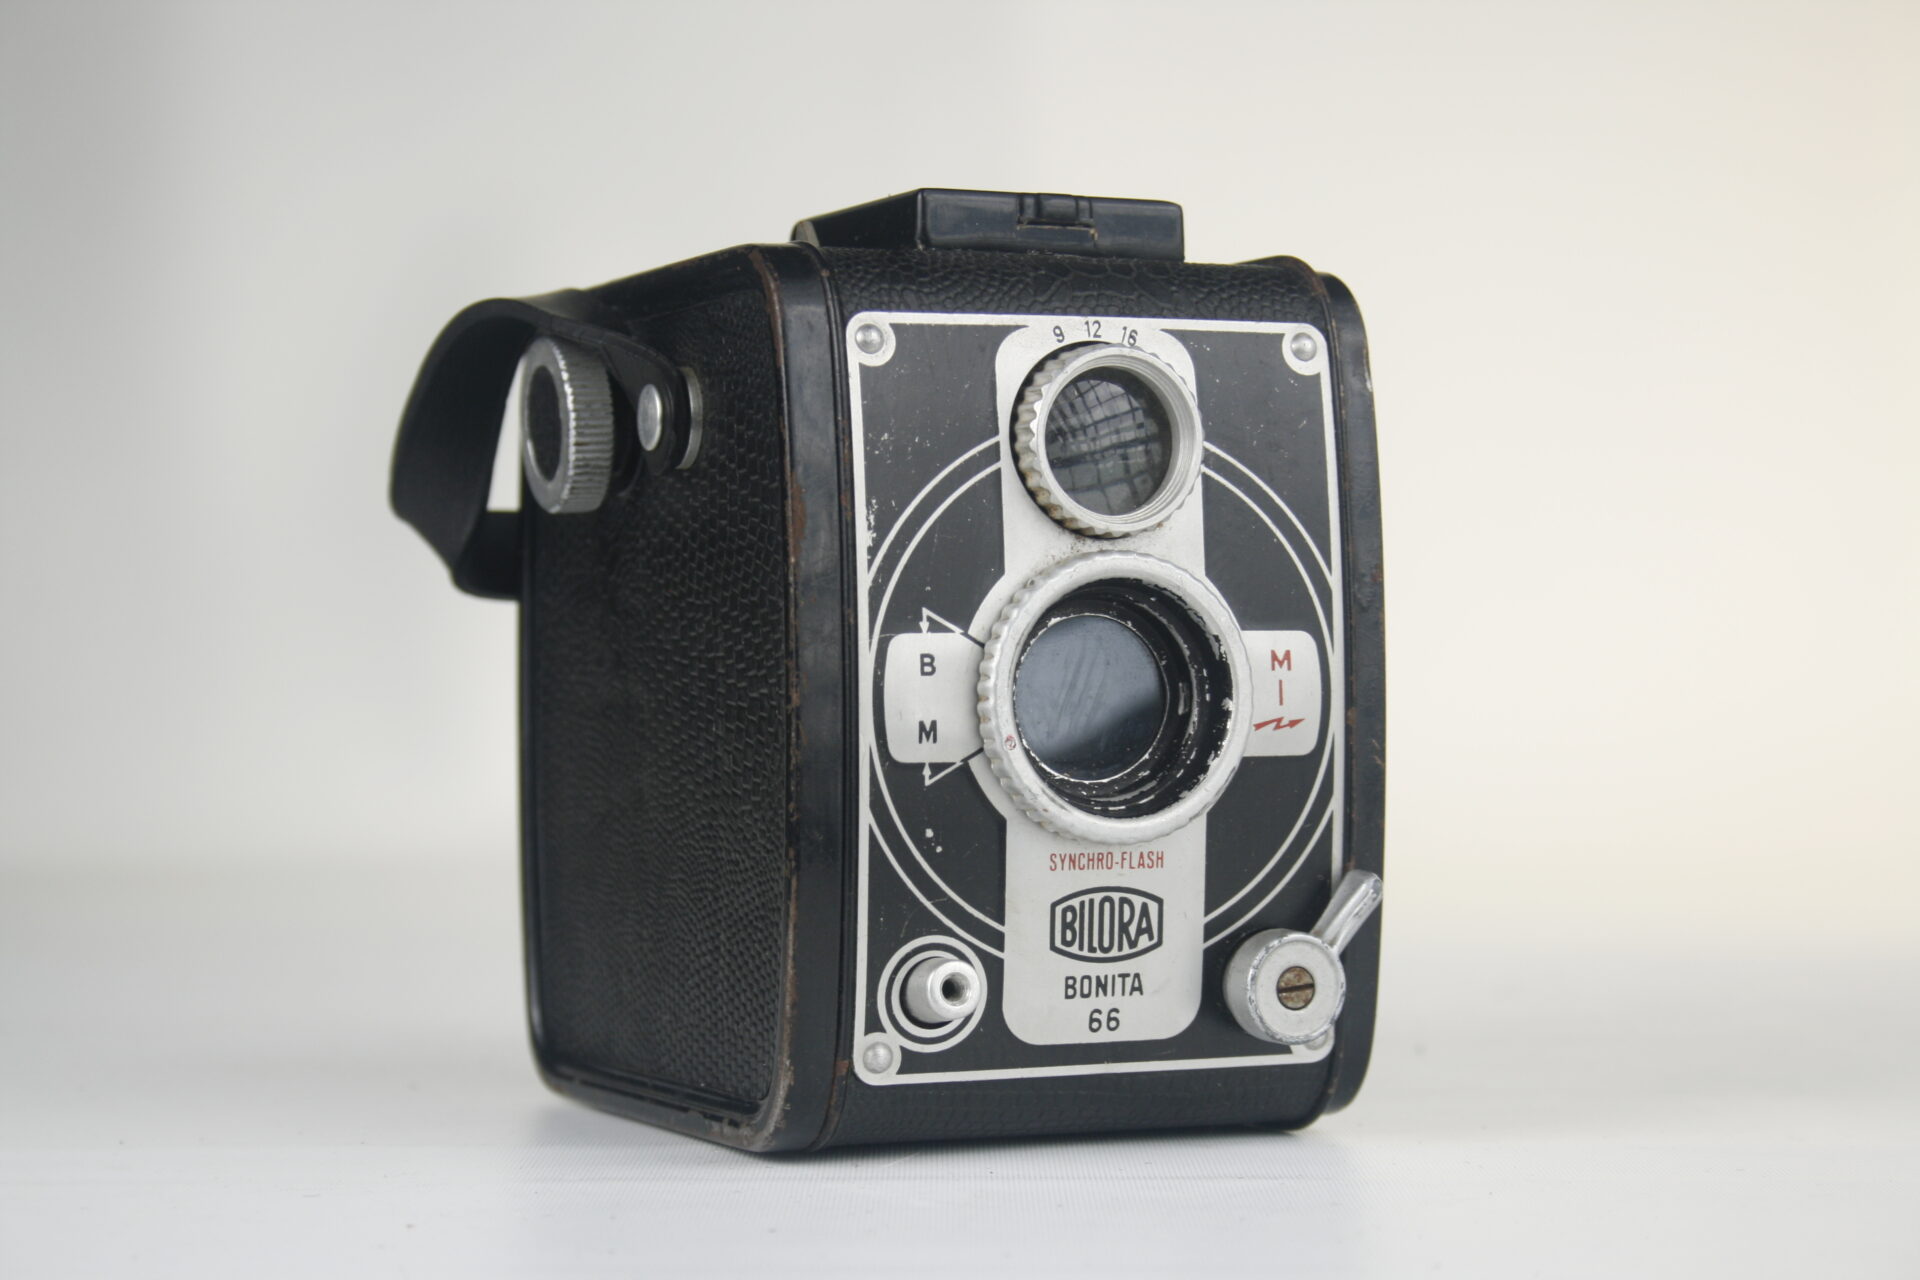 Bilora Bonita 66. 120 film.  Pseudo TLR camera. 1951-1958. Duitsland.